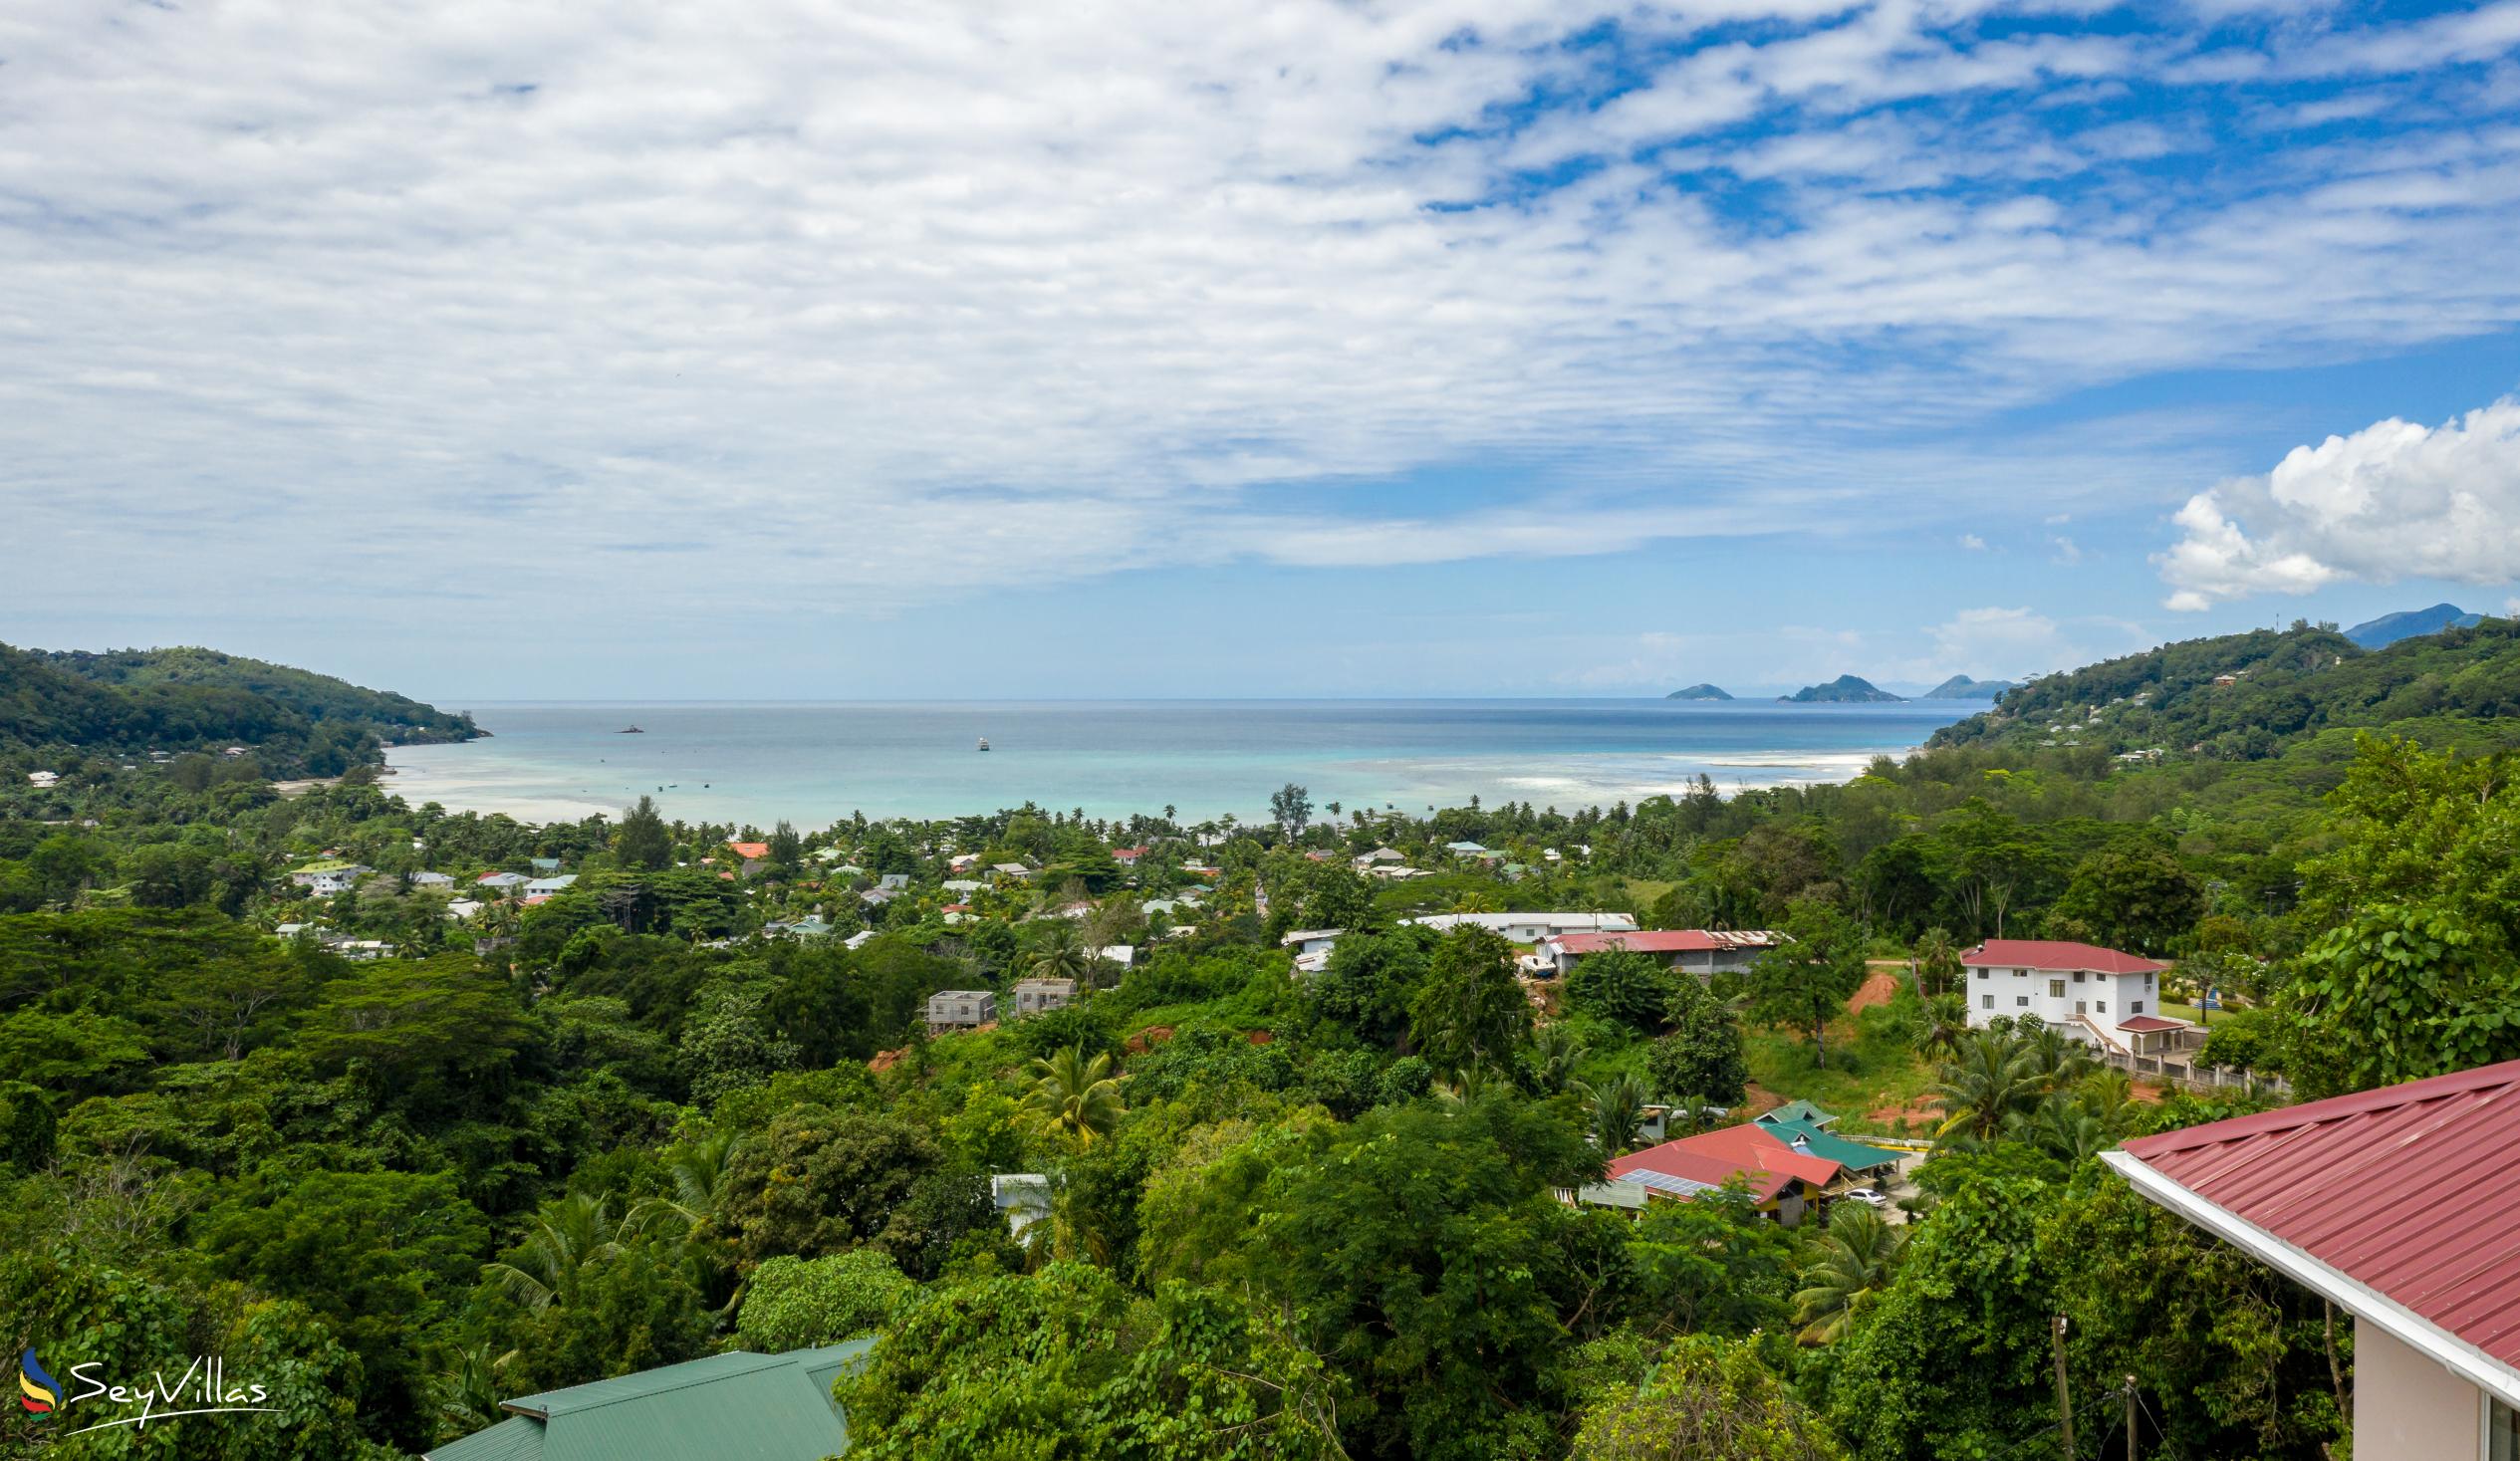 Foto 16: Cella Villa - Location - Mahé (Seychelles)